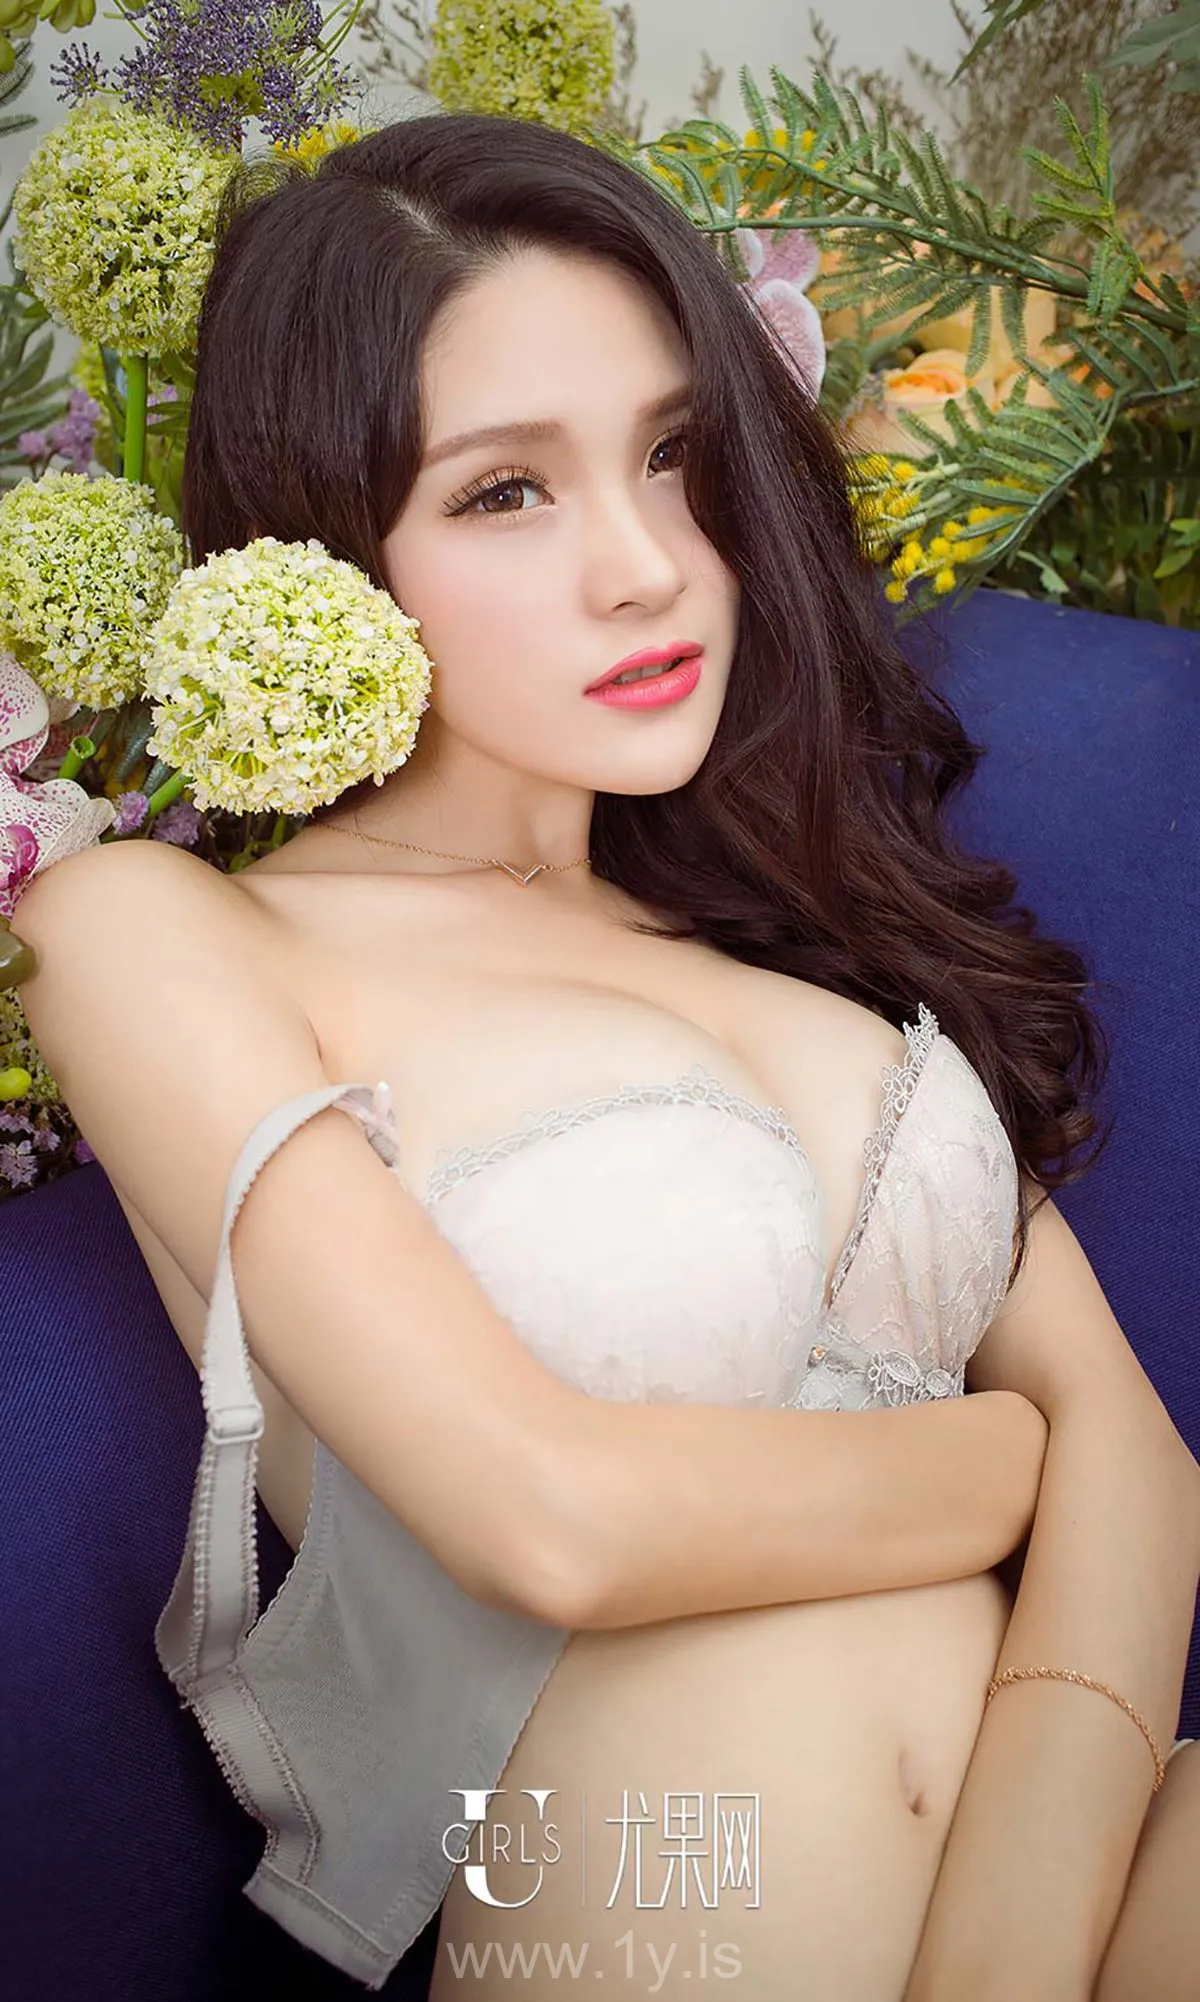 UGIRLS NO.541 Attractive & Adorable Chinese Chick 吕诗茗_诗与远方